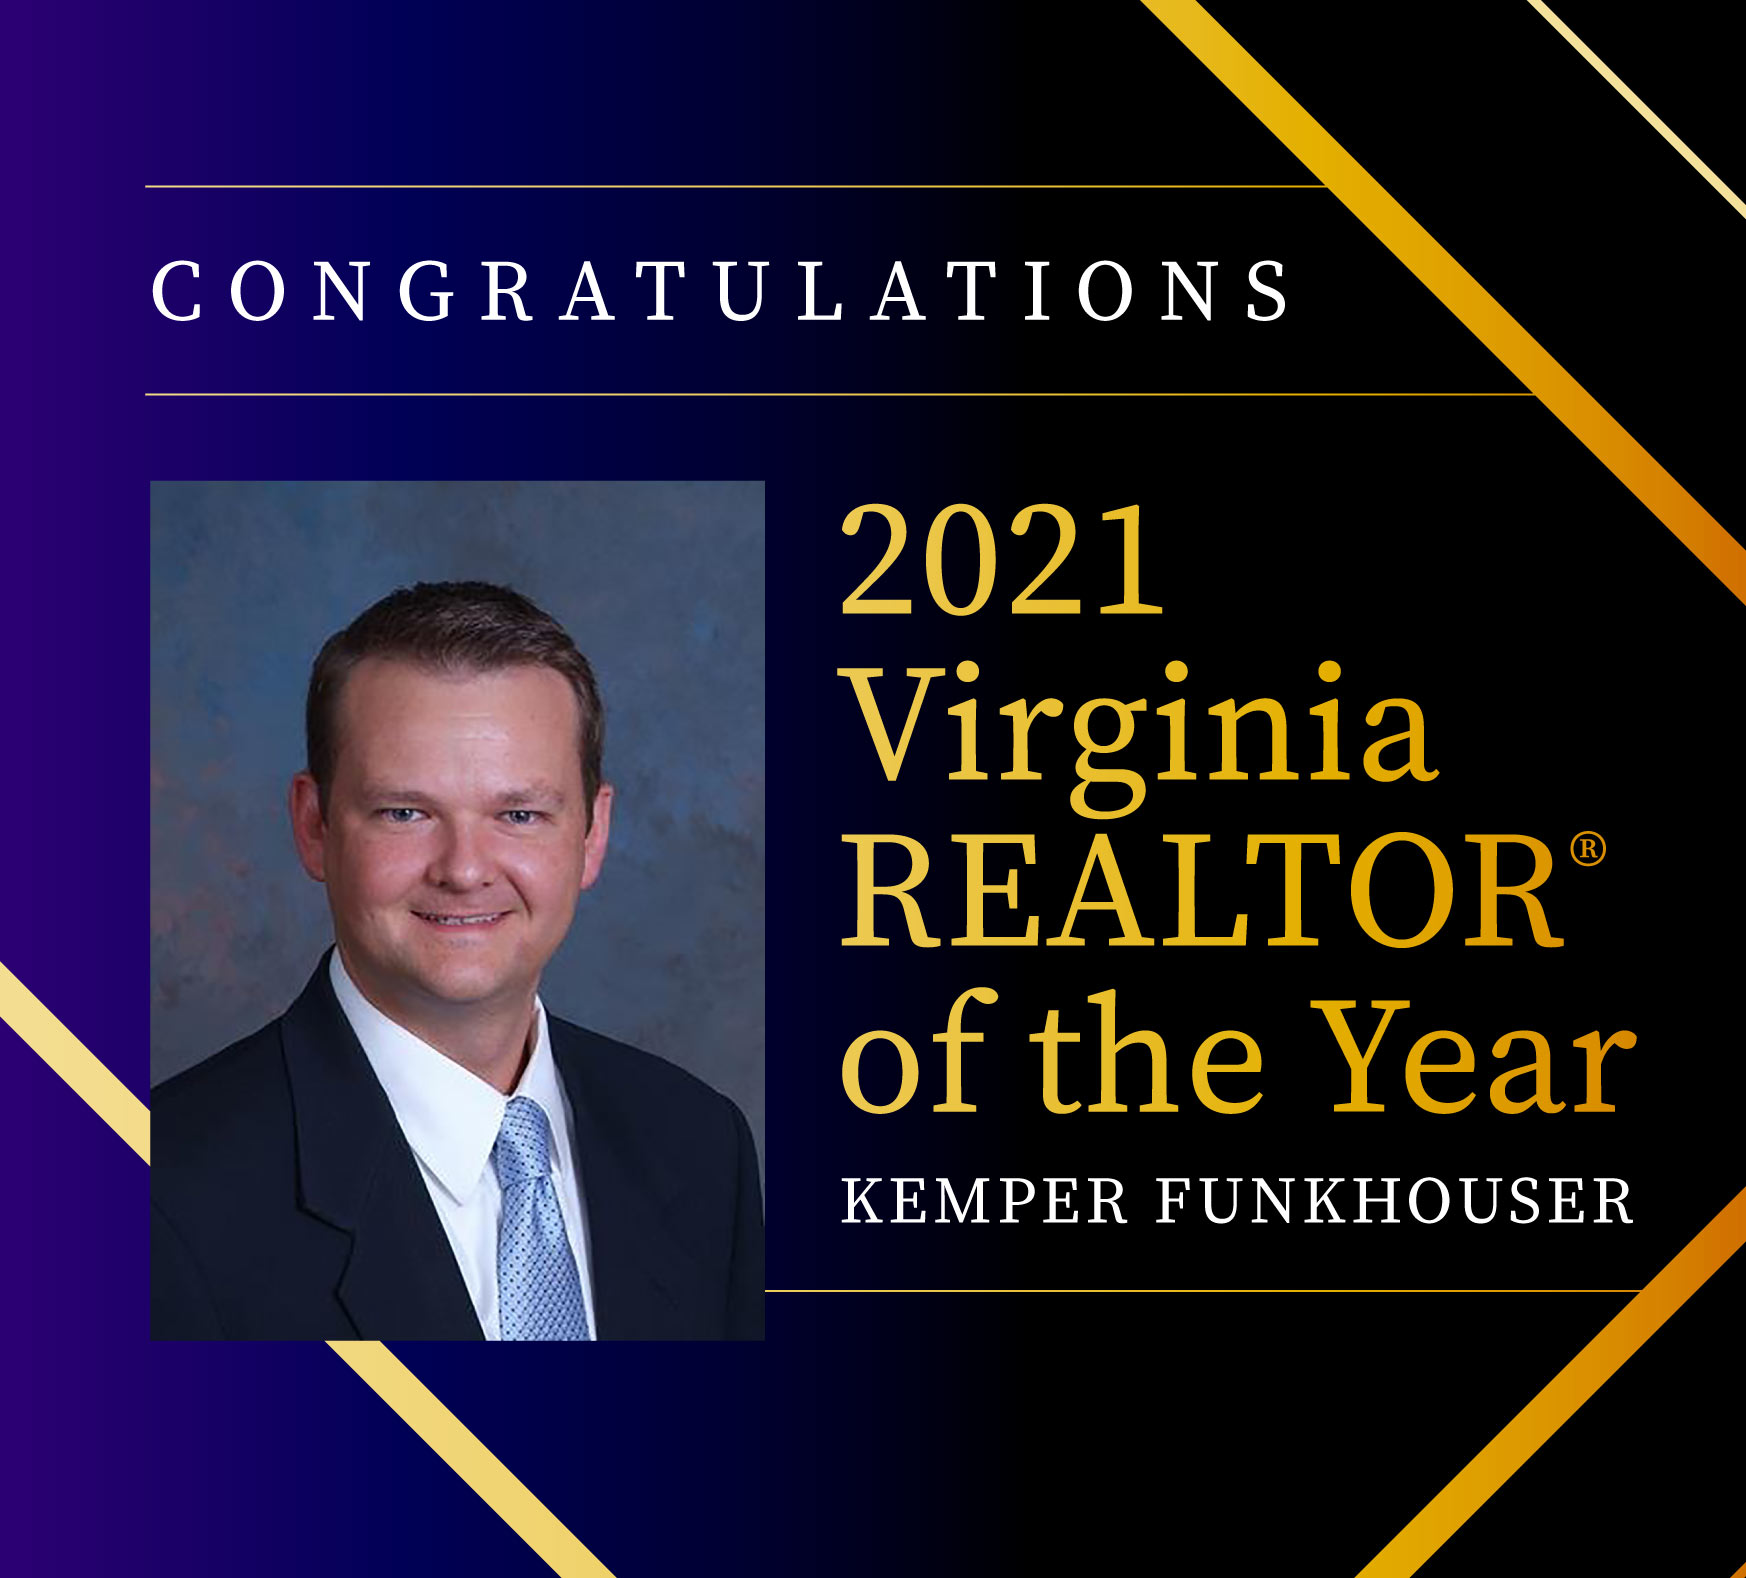 2021 Virginia REALTOR® of the Year